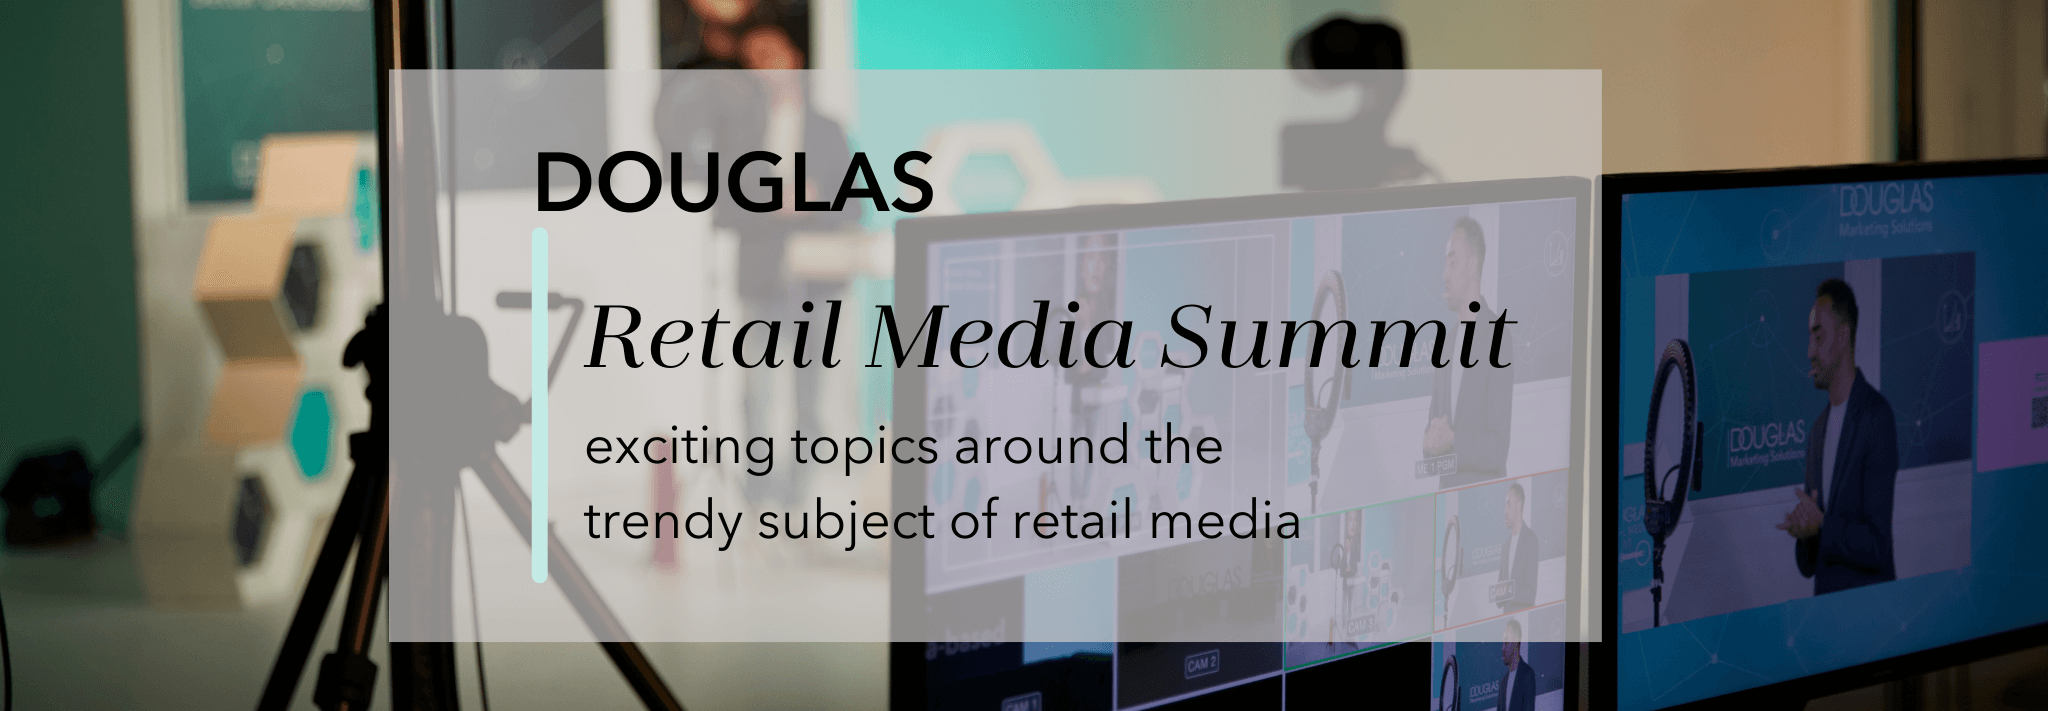 Titelbild mit Schriftzug - Douglas Retail Media Summit